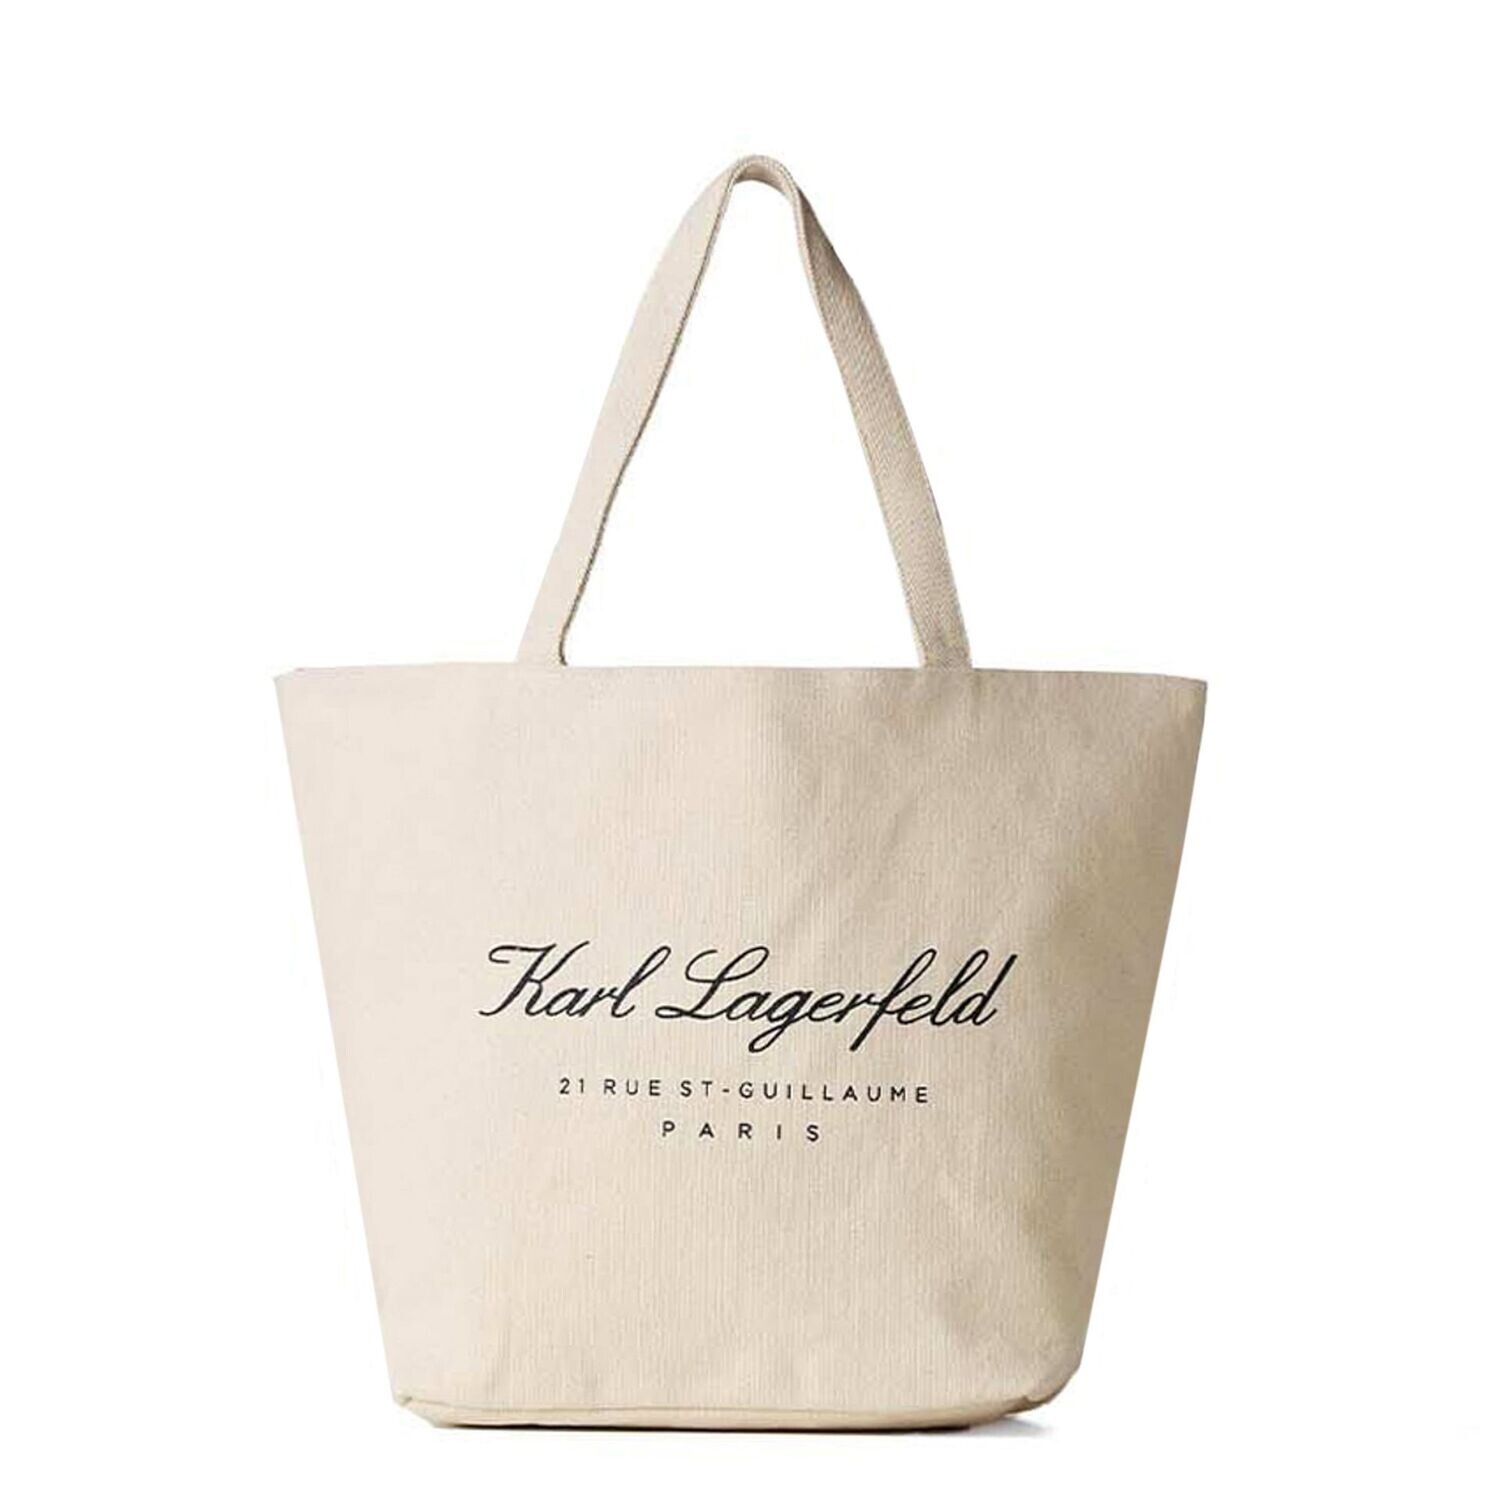 Karl Lagerfeld Black Shopping Bag